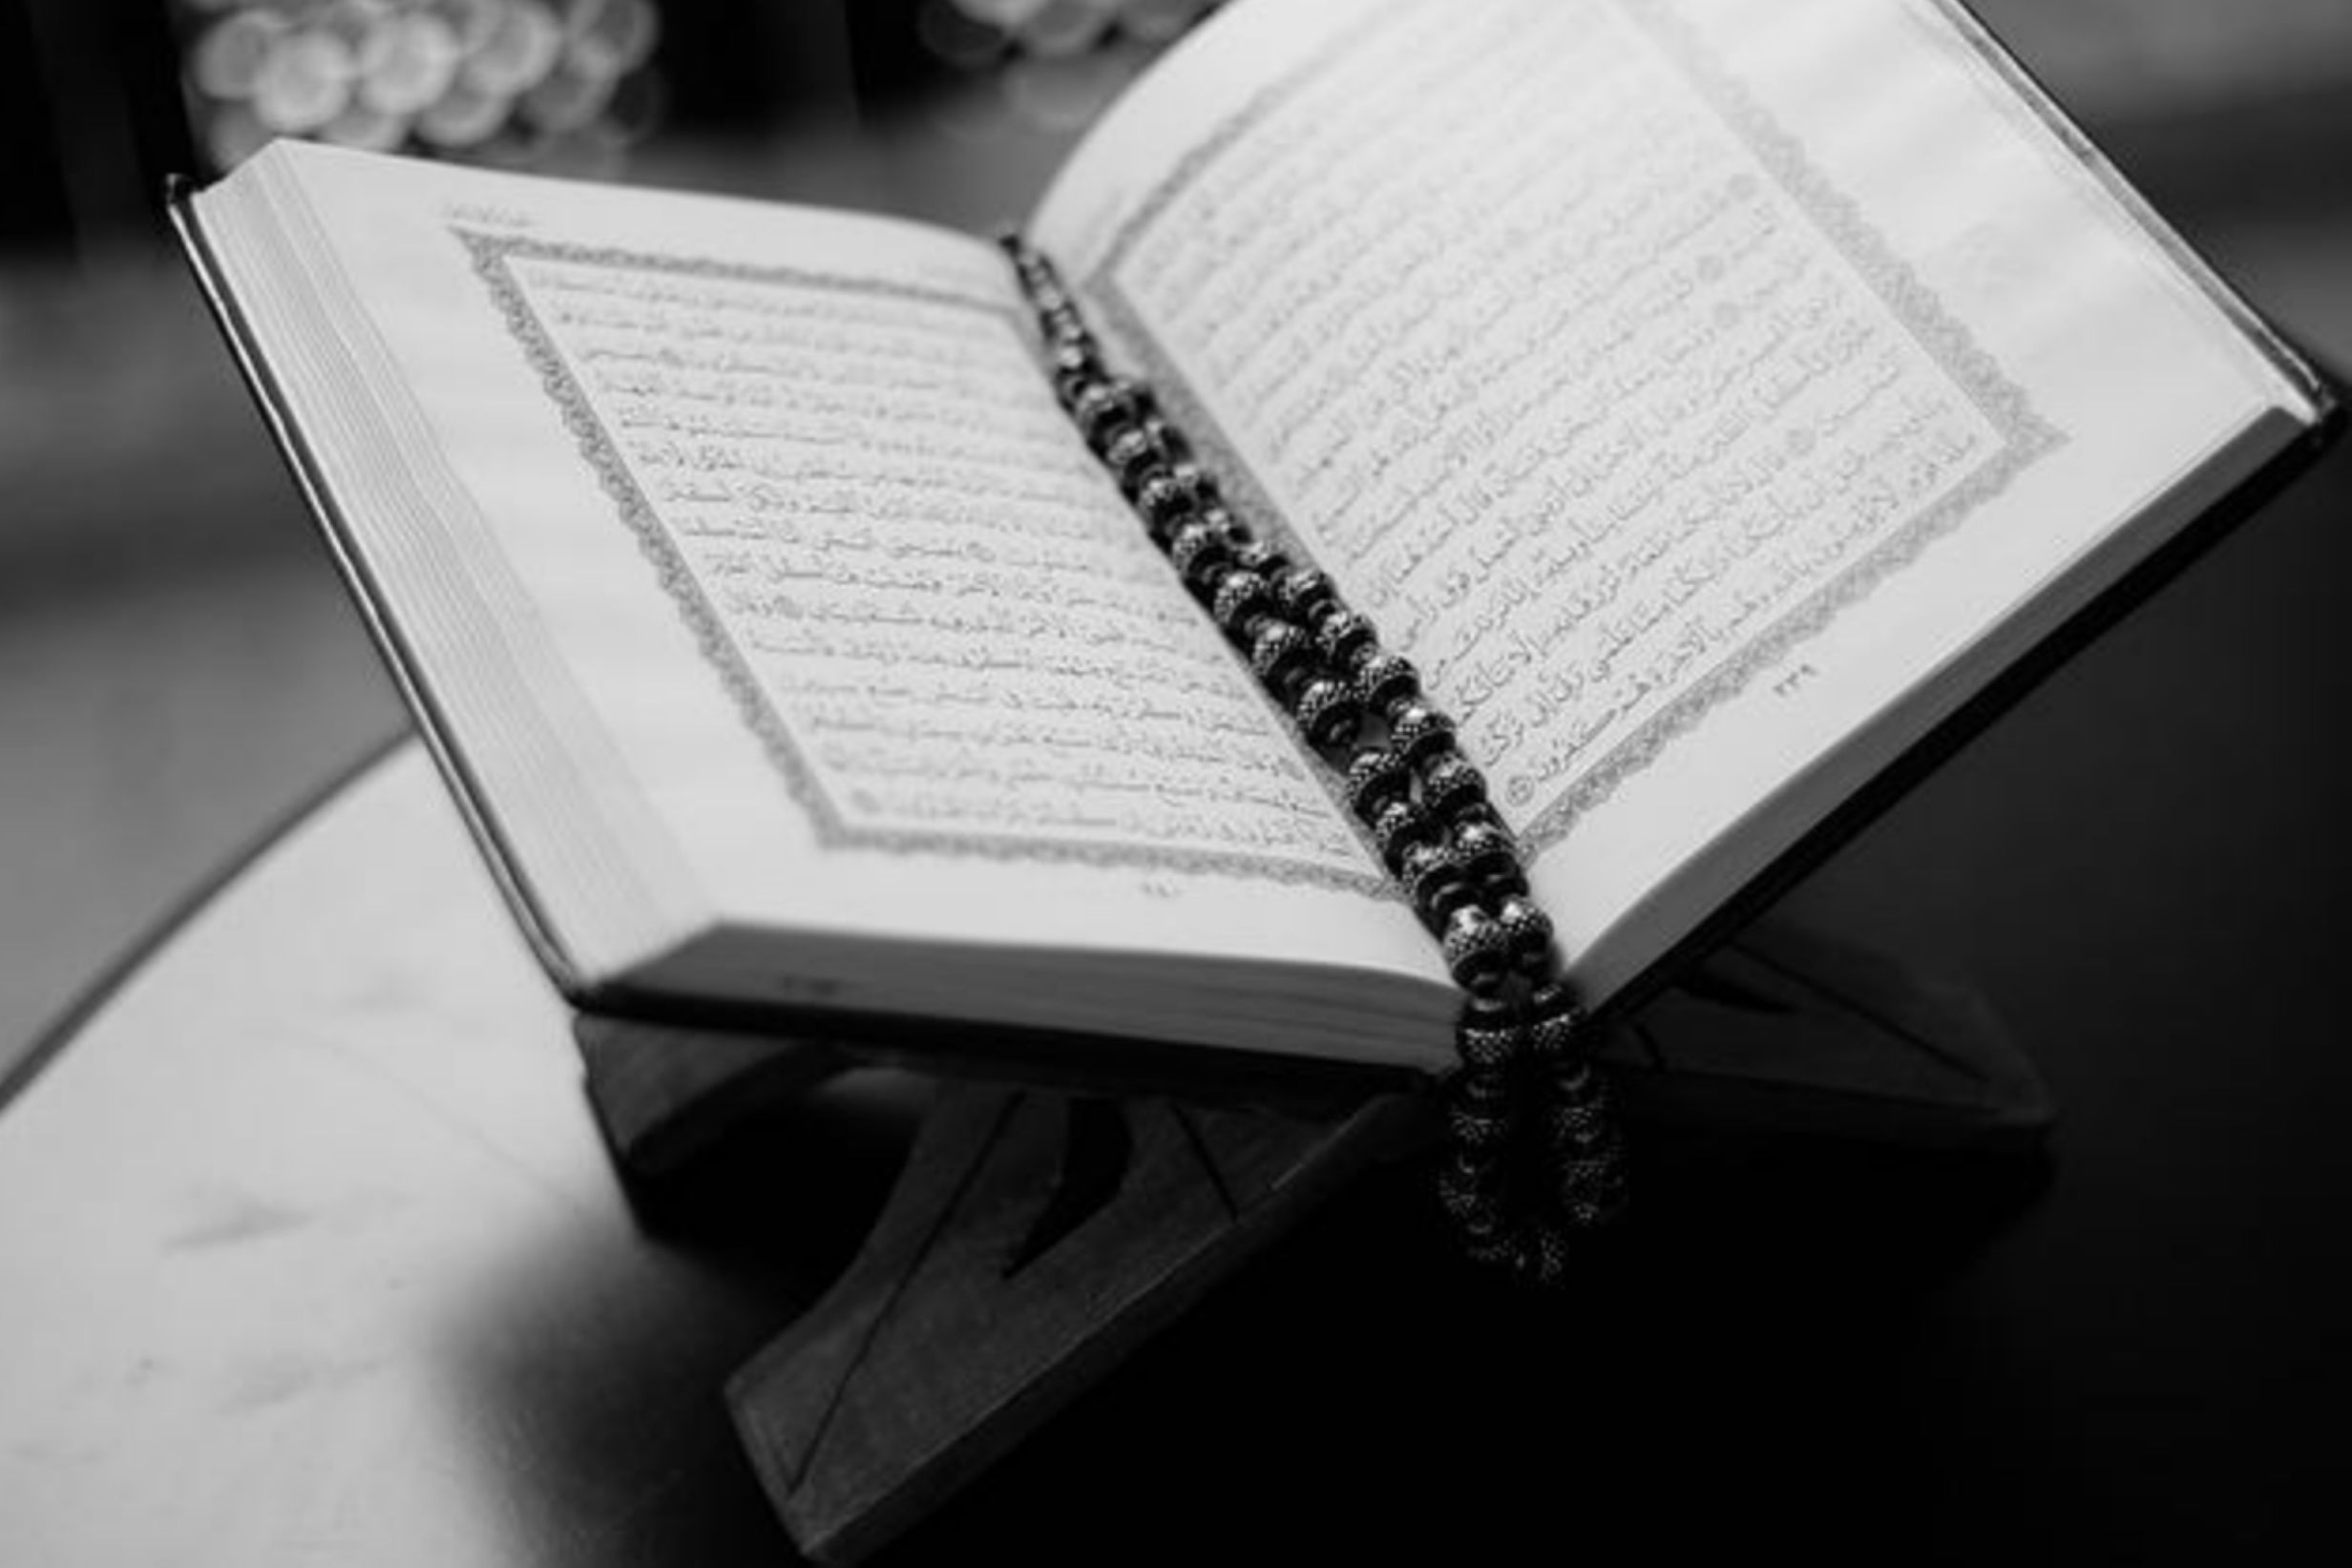 Foto kitab suci Al-Qur'an terbuka untuk dibaca dalam mengisi puasa sunnah arafah di 9 Dzulhijjah